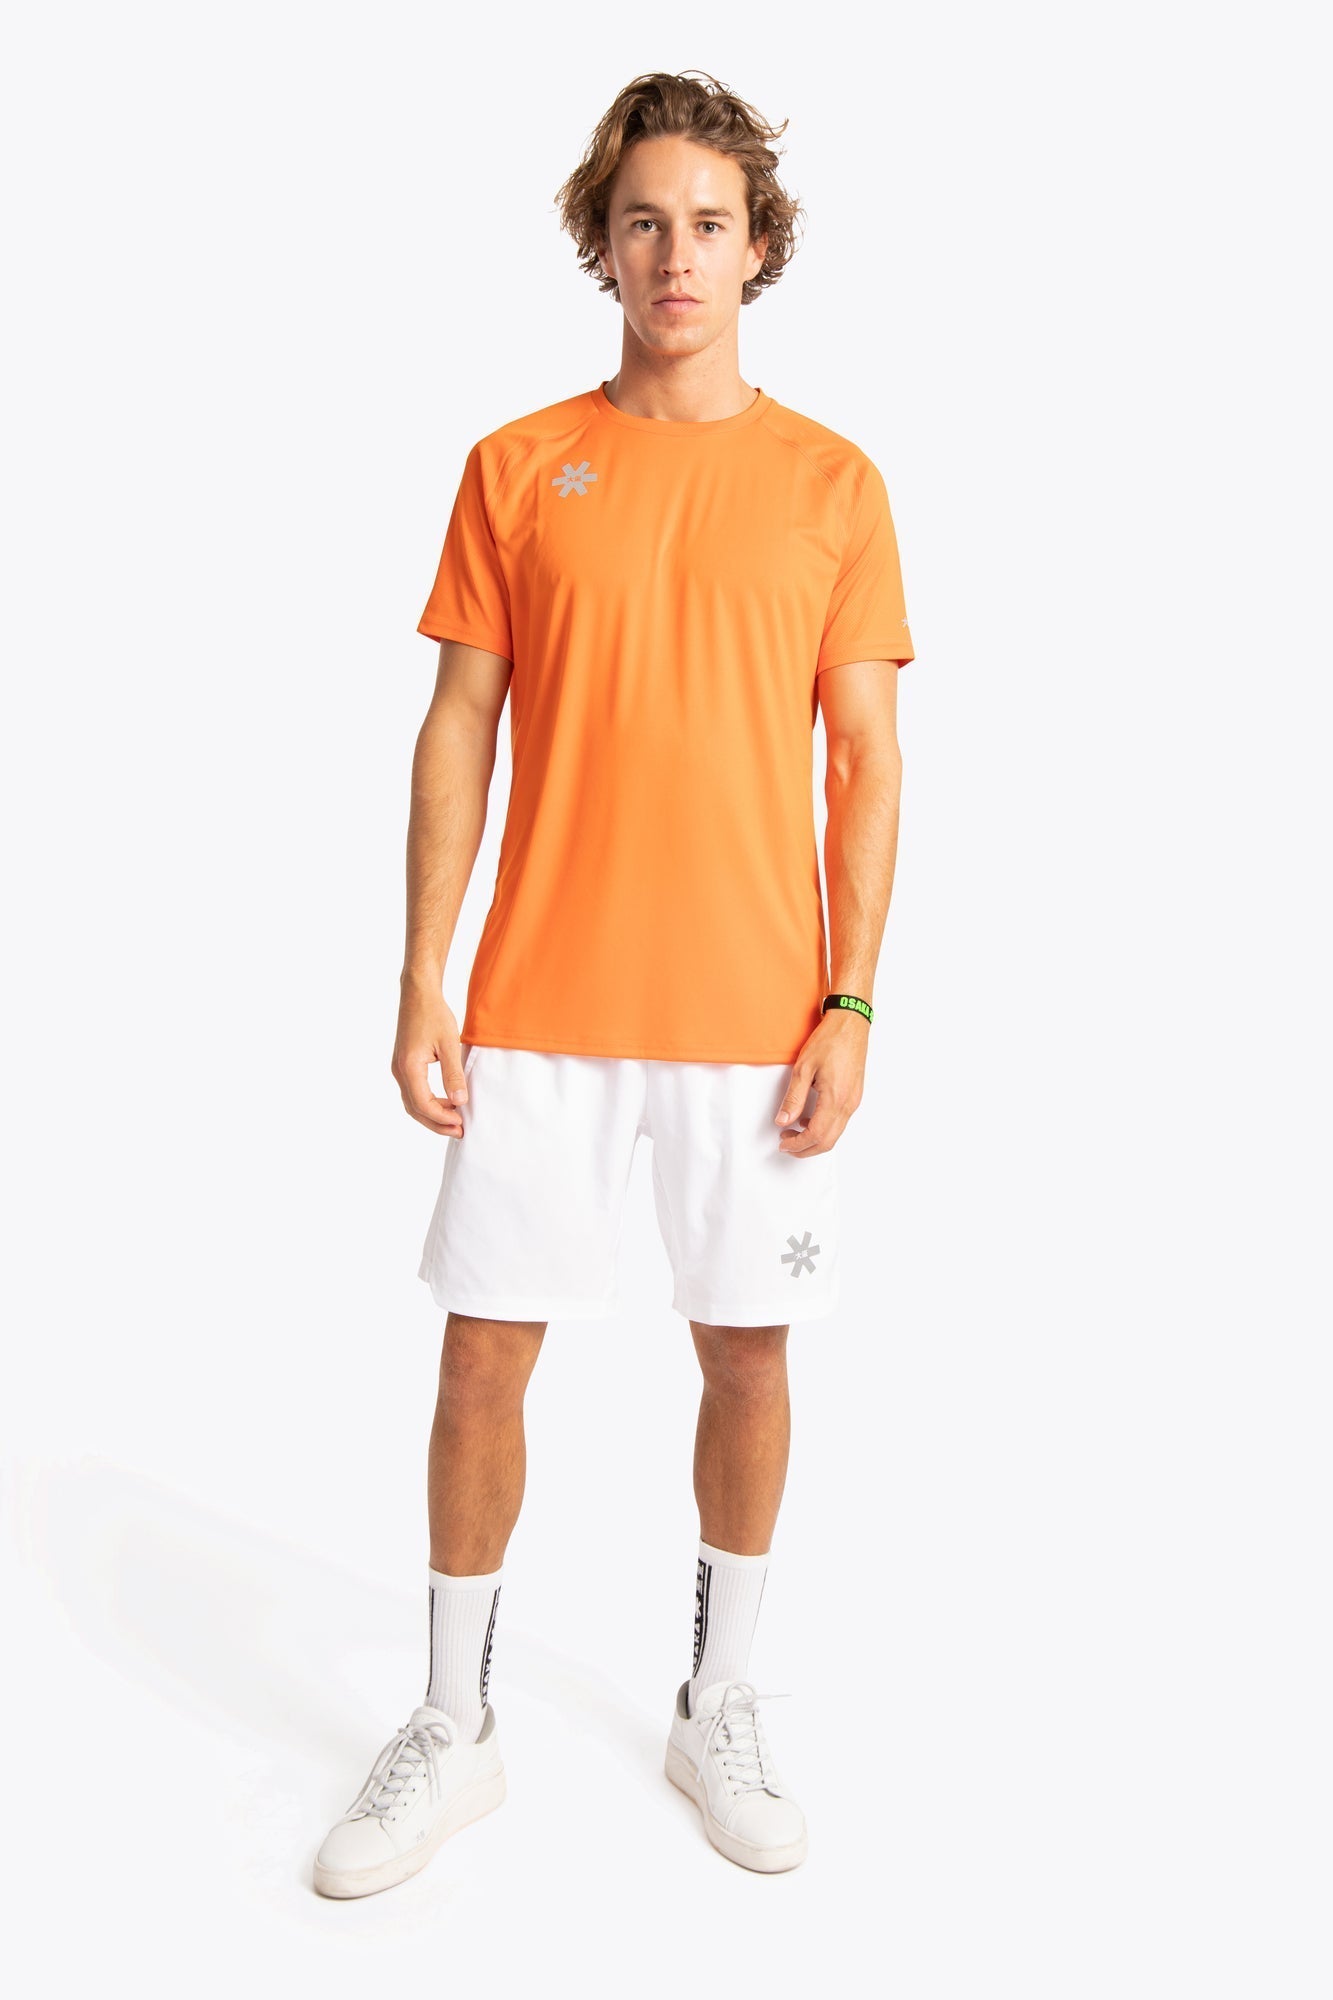 Osaka Mannen Training T-shirt (Oranje)